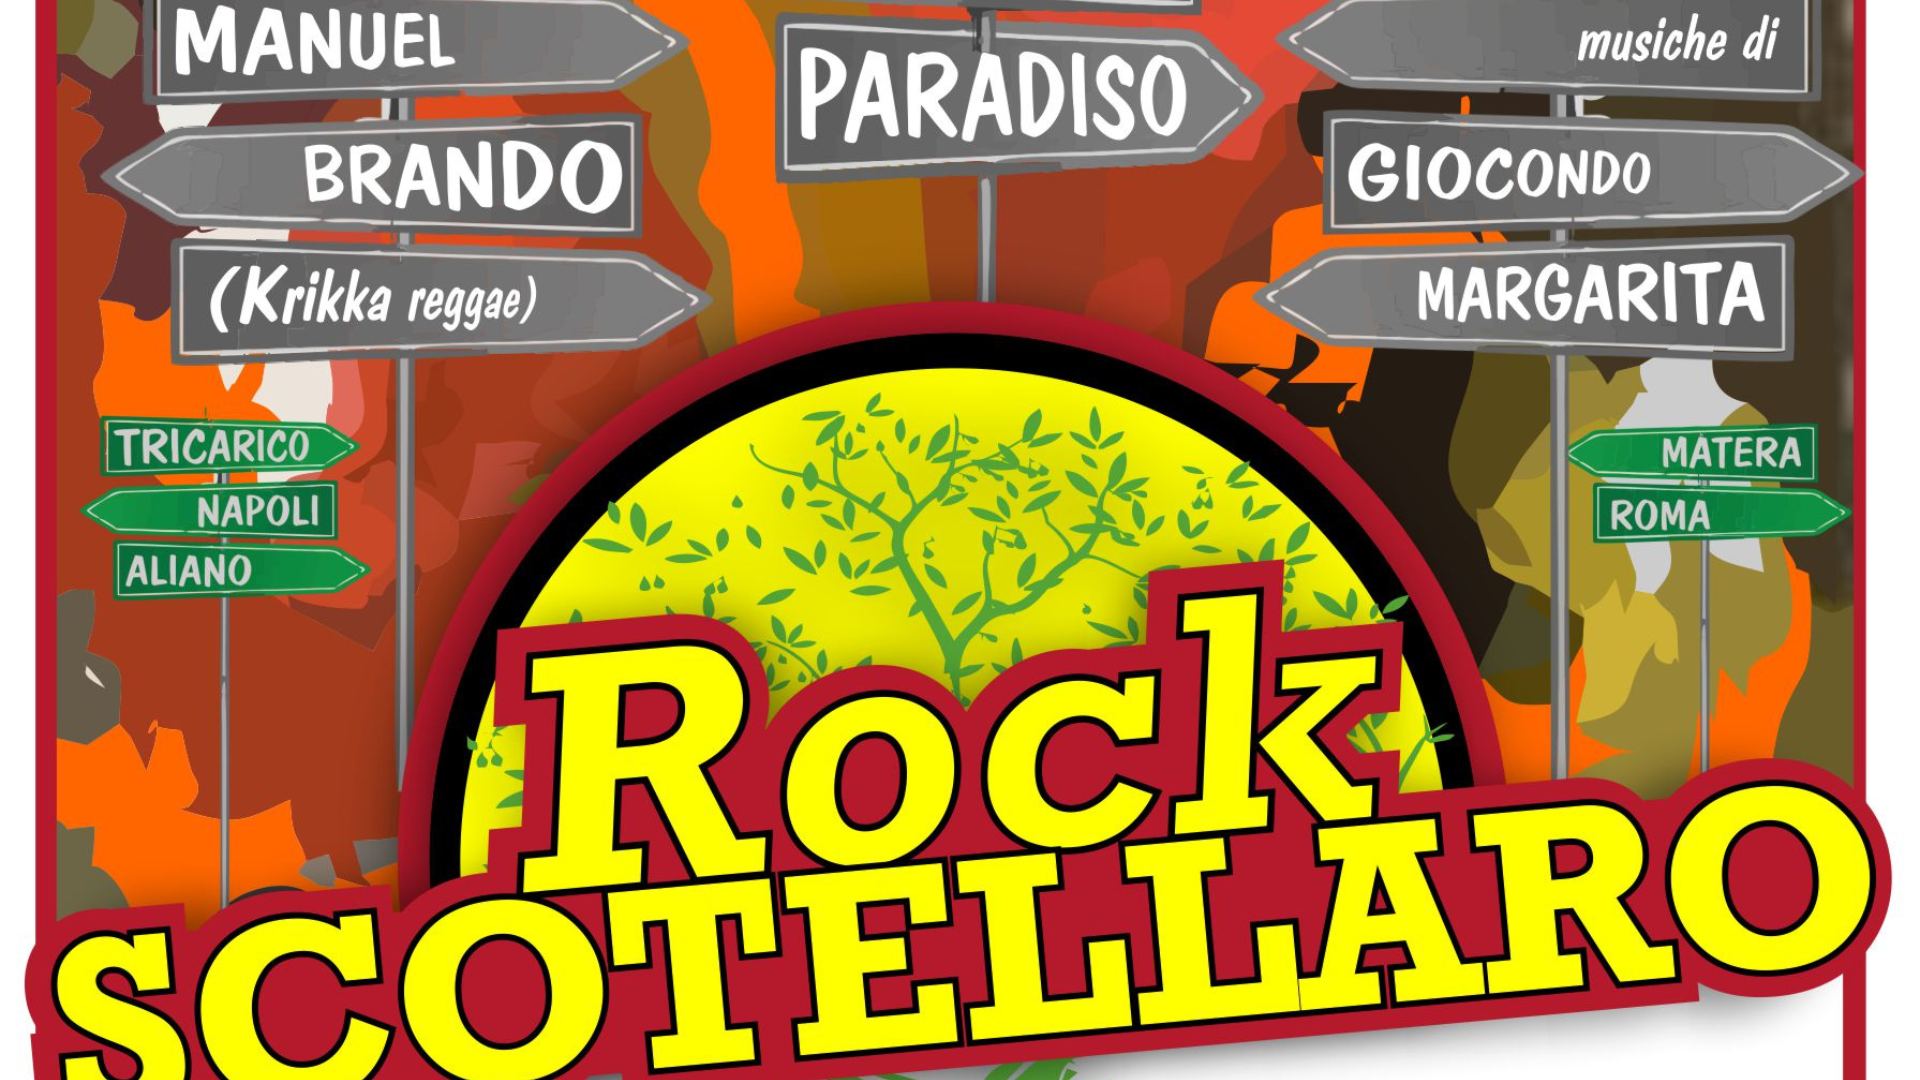 ROCK SCOTELLARO - VIGGIANELLO